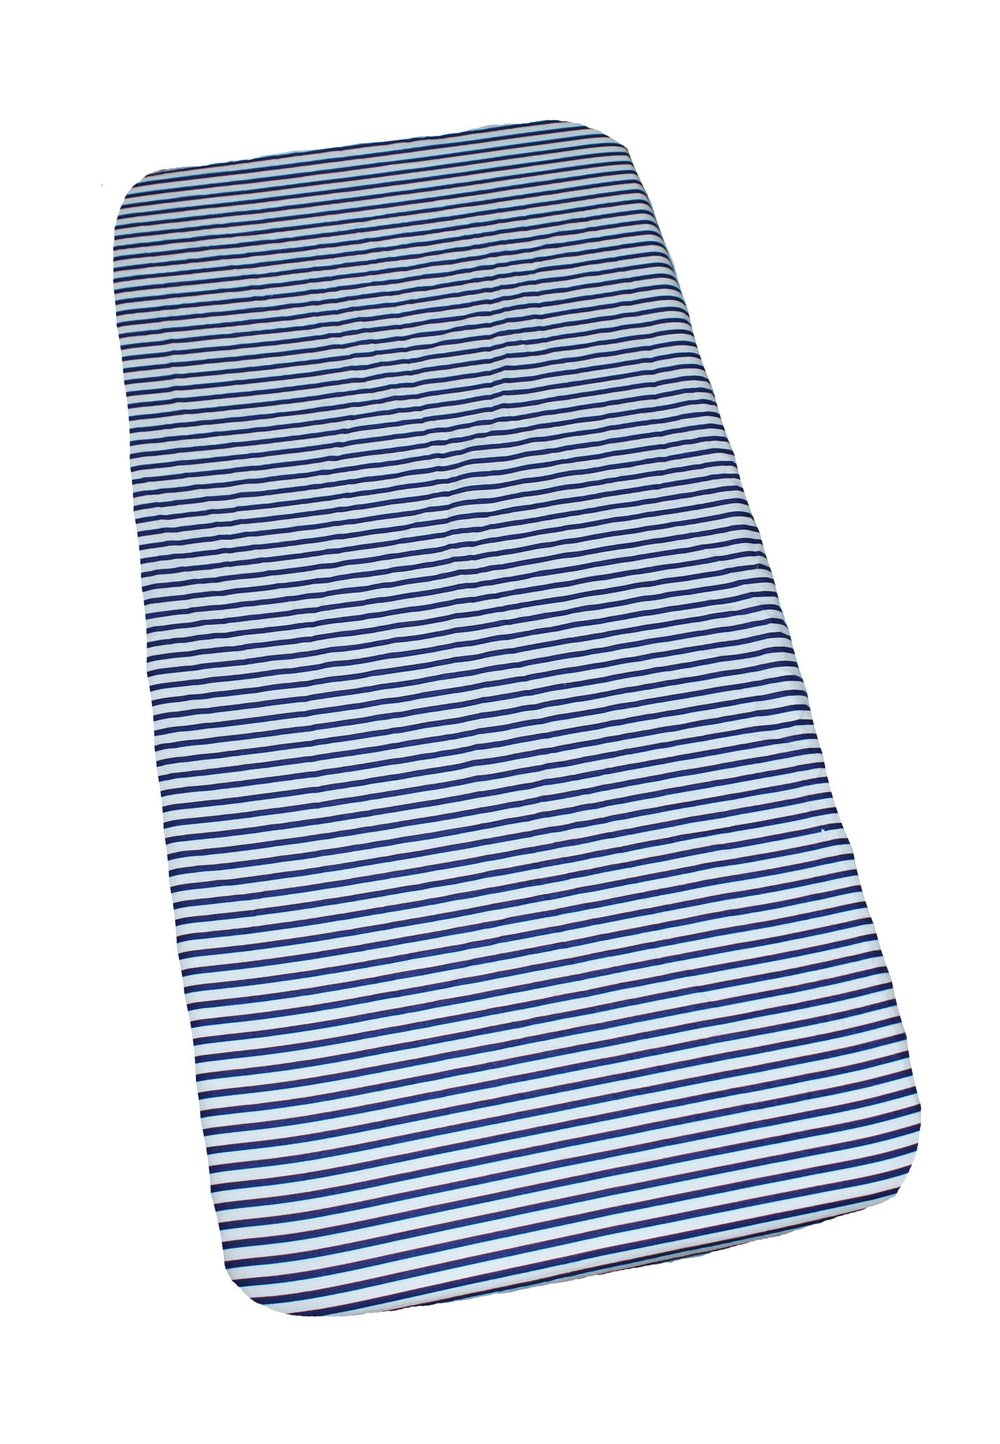 Cearceaf bumbac, alb cu dungi bluemarin, 120×60 cm Prichindel